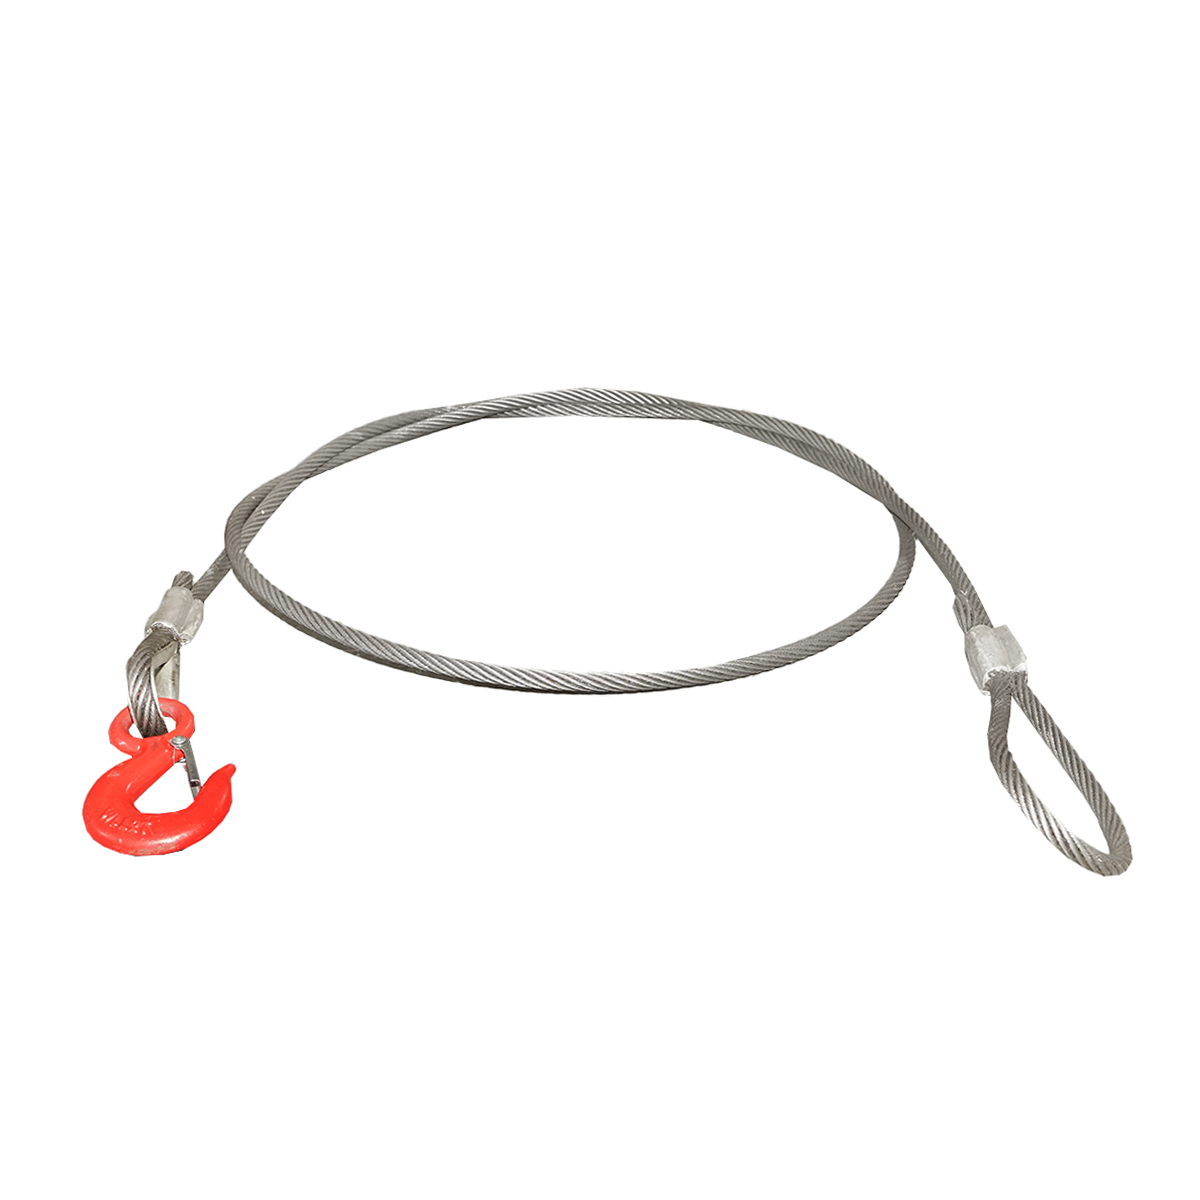 Cablu/sufa troliu din otel cu grosime de 12mm si lungime de 3m, carlig si inel pentru tractat sau ridicat